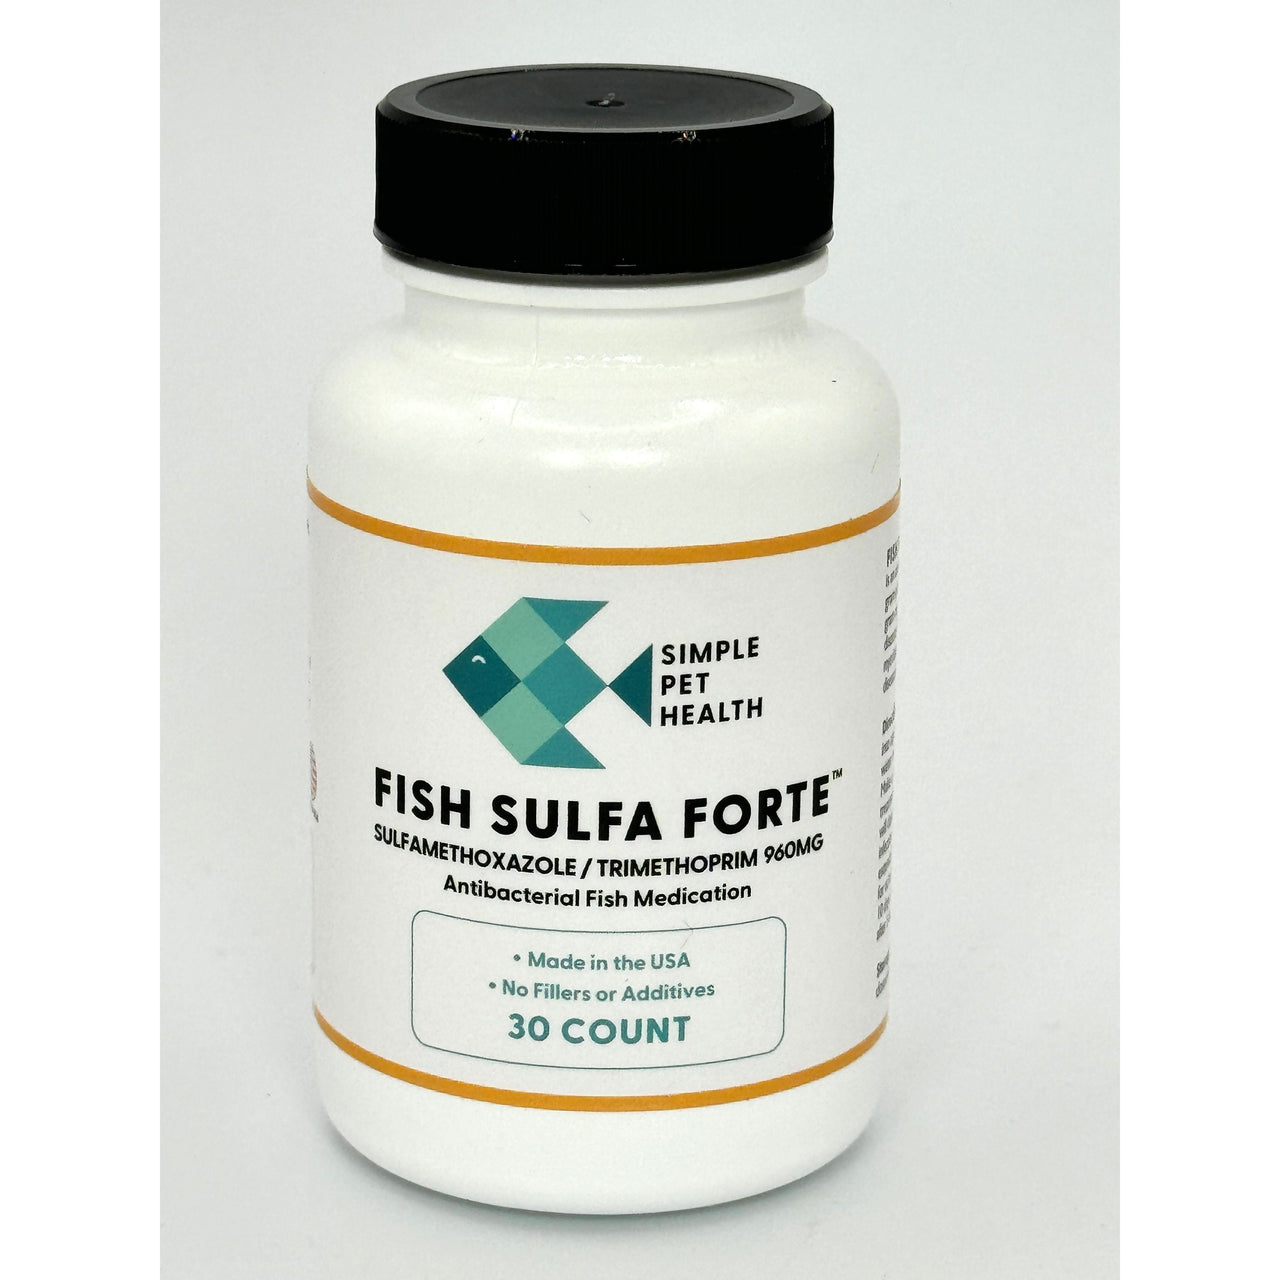 Fish Sulfa Forte™ - Sulfamethoxazole/Trimethoprim 800/160 mg - 30 count